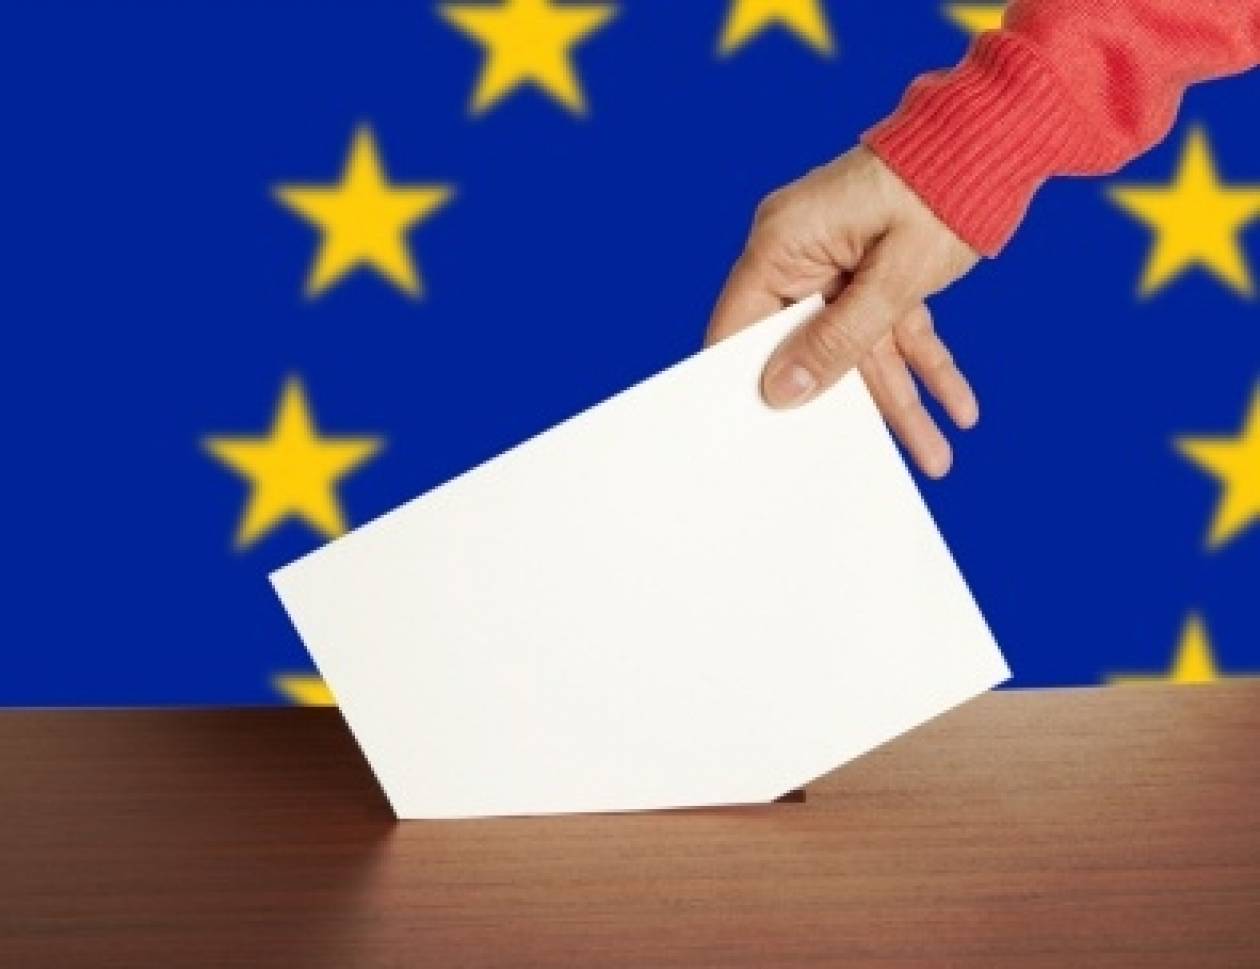 AP: Οι ευρωεκλογές μπορεί να εκτροχιάσουν τις πολιτικές ευρωπαϊκών χωρών